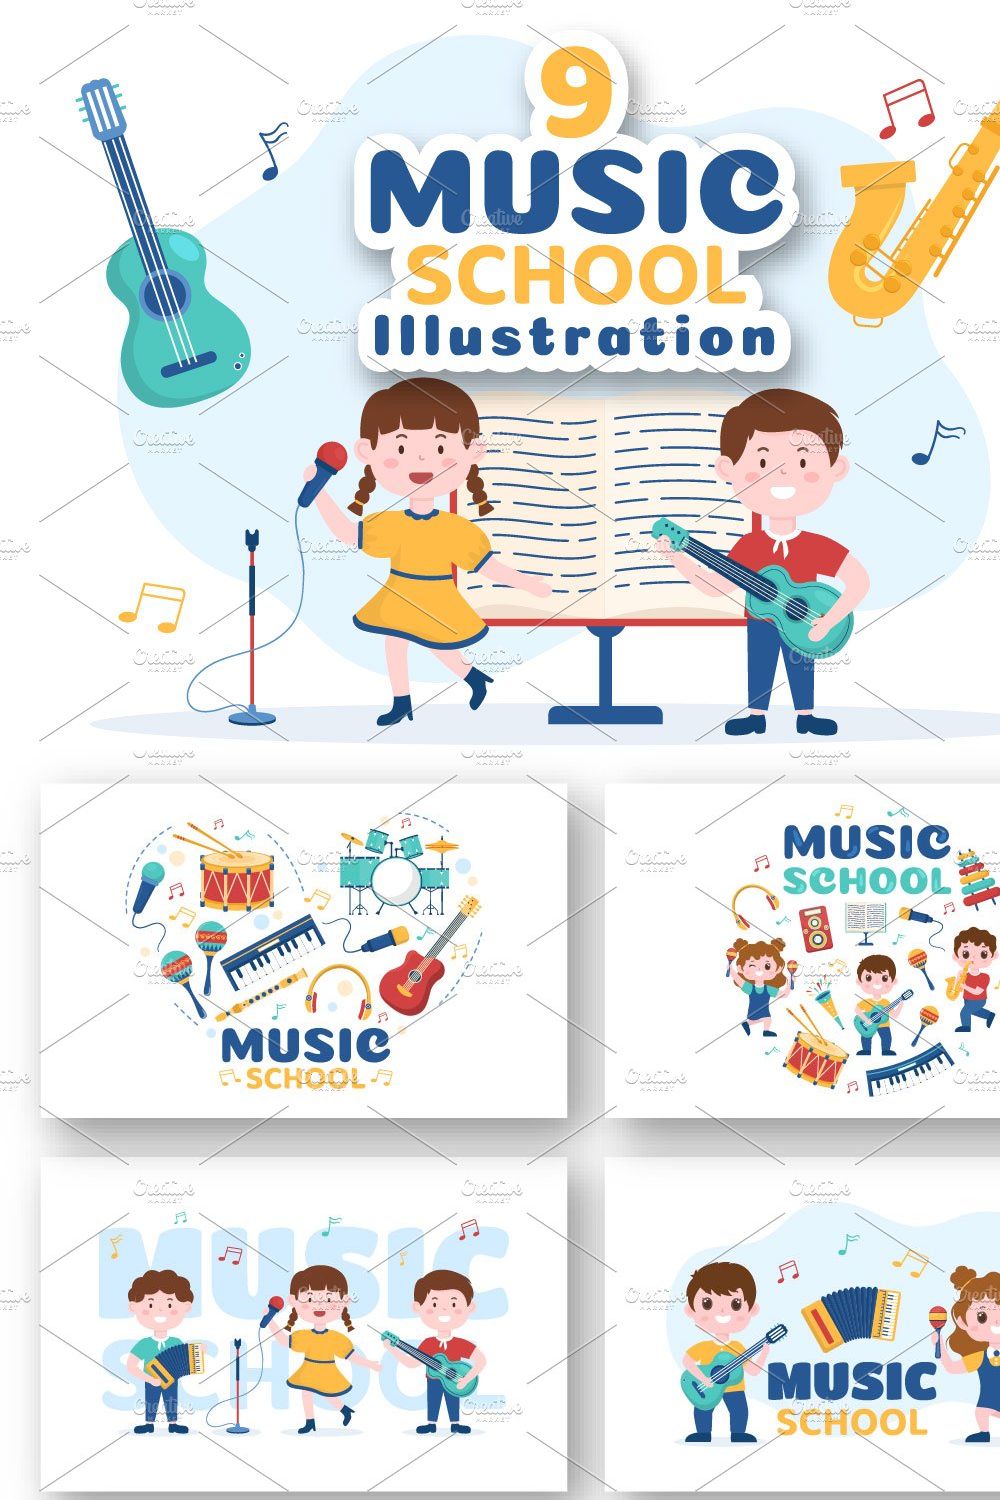 9 Music School Illustration pinterest preview image.